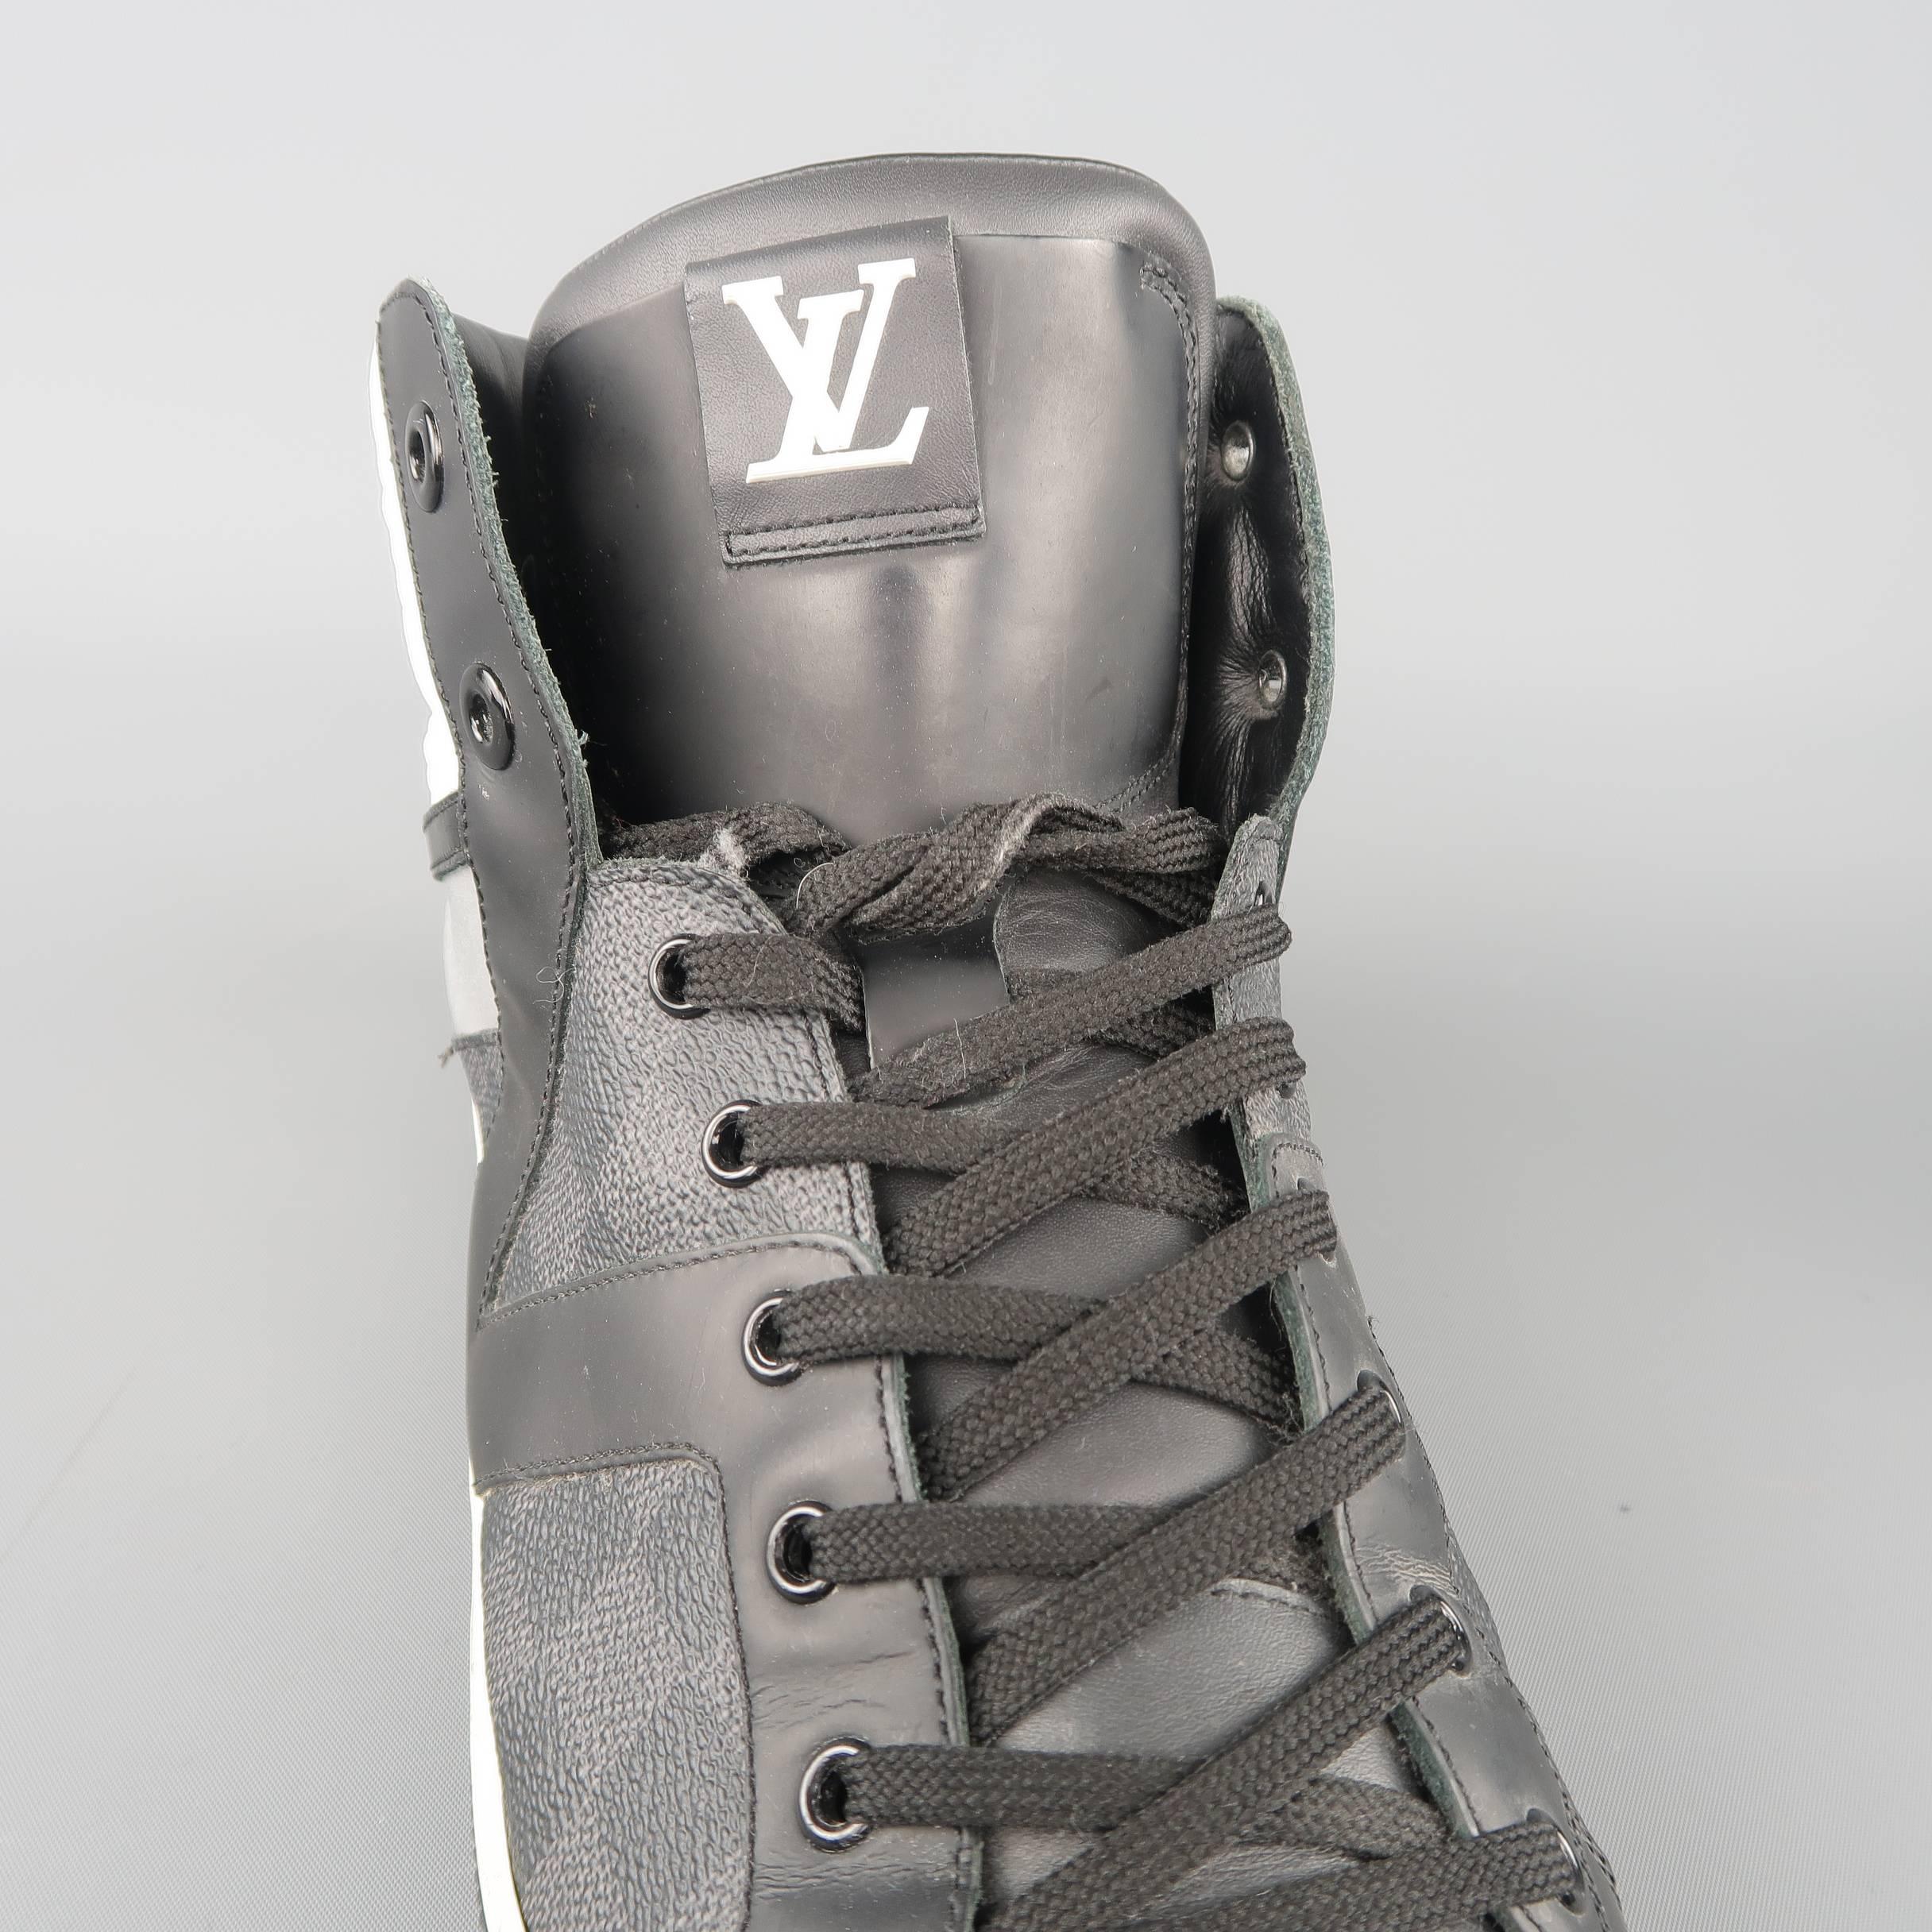 Louis Vuitton Damier Graphite high top sneaker – Uptown Cheapskate Torrance